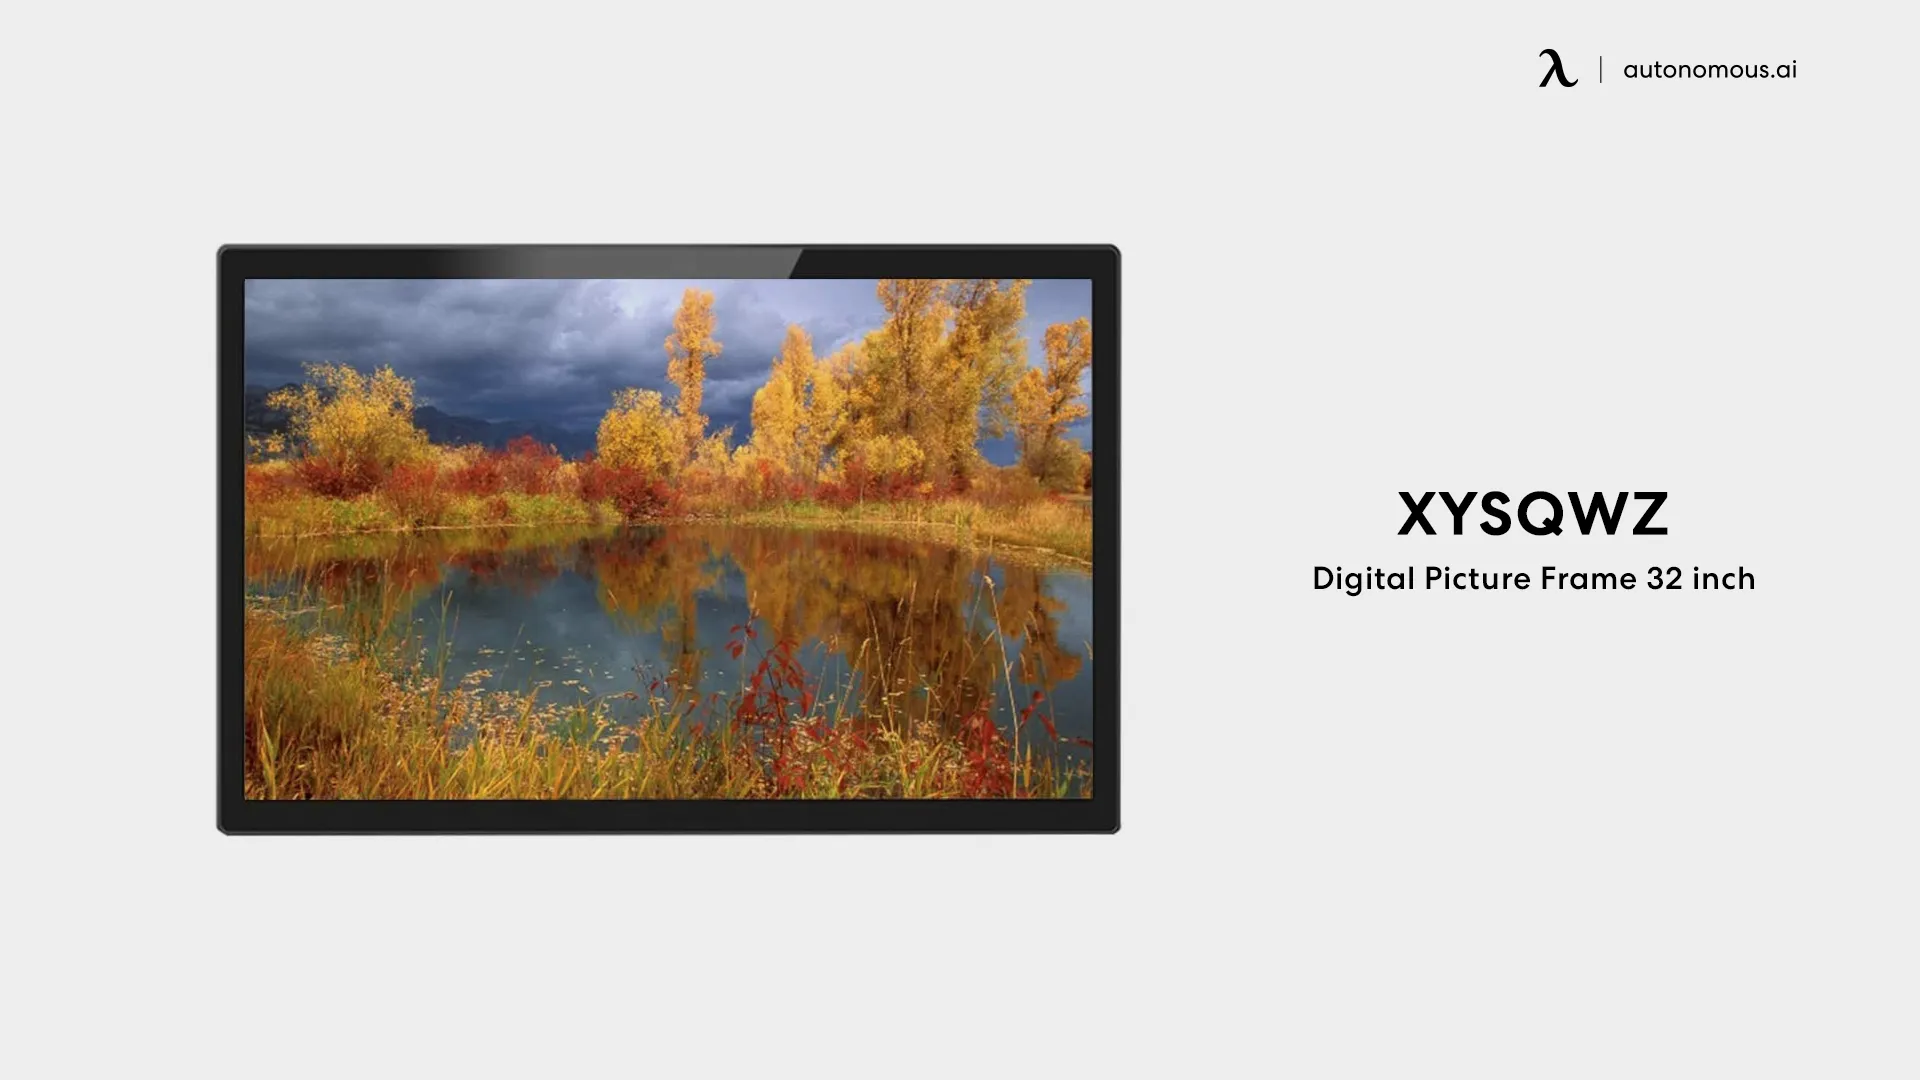 XYSQWZ Digital Picture Frame, 32-inch